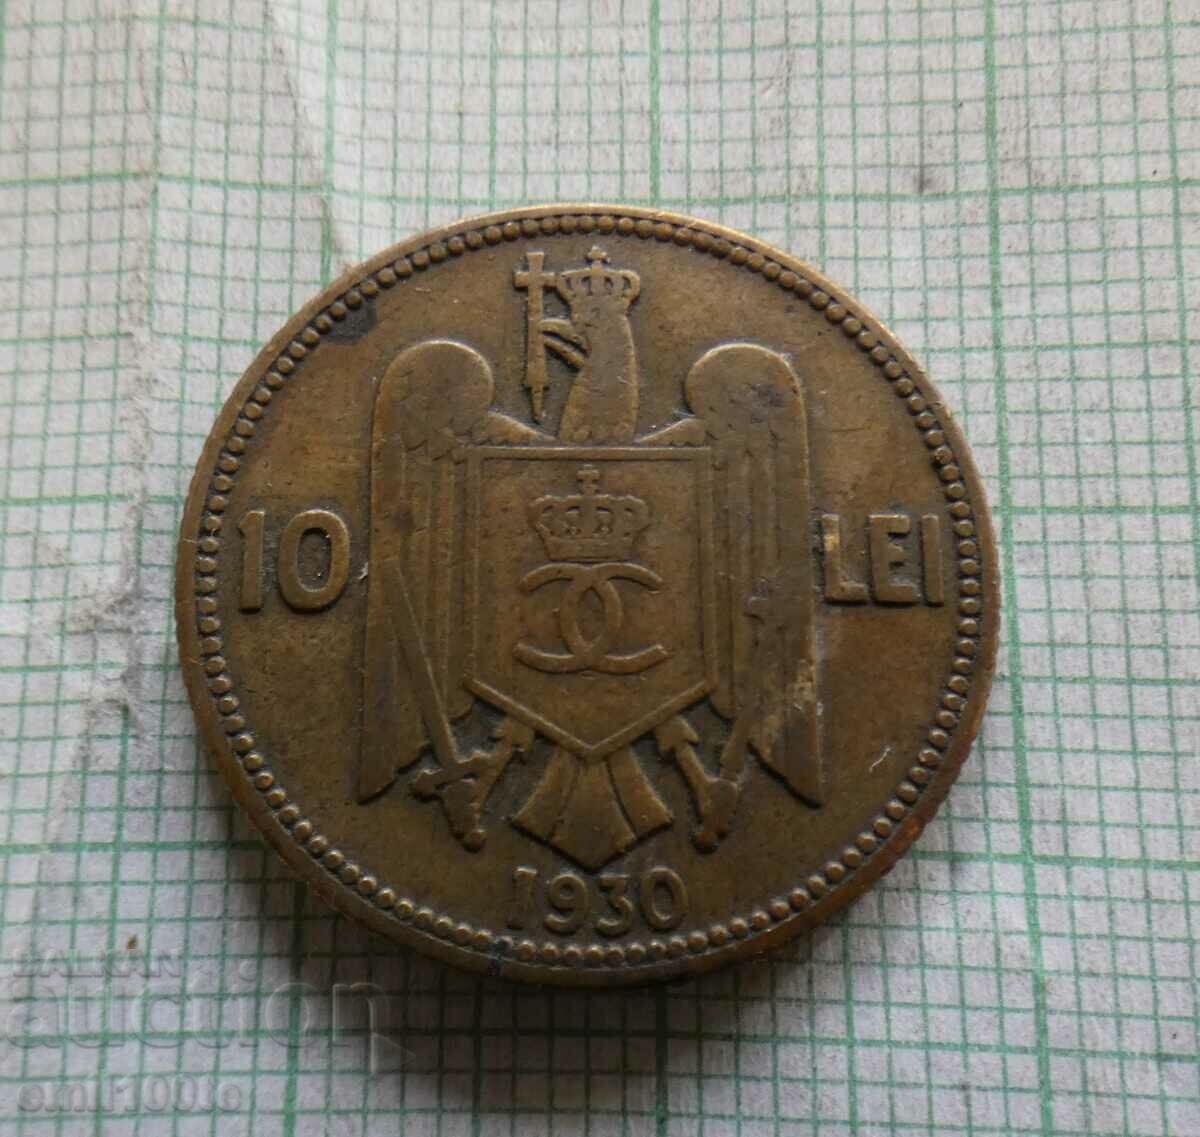 10 lei 1930 Romania